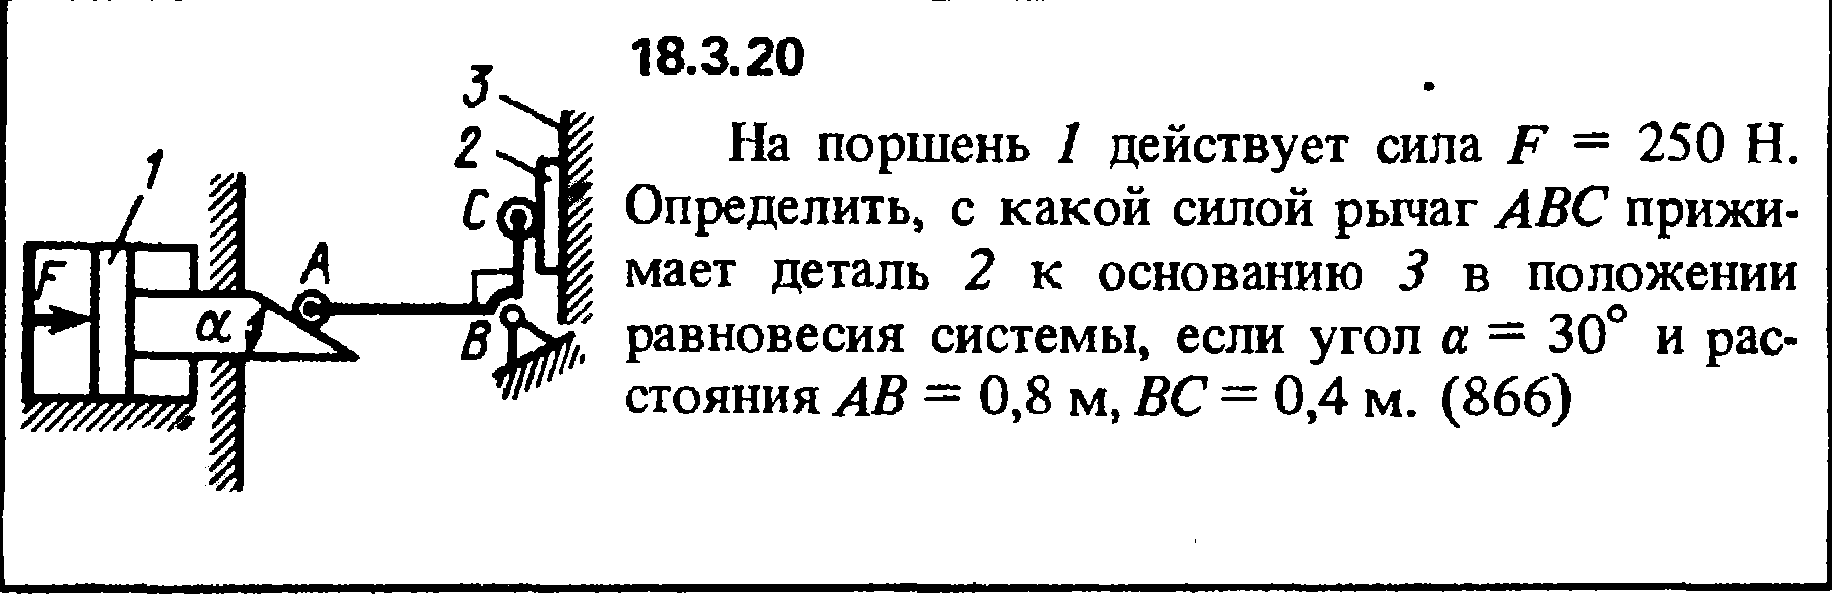 Решение 18.3.20 из сборника (решебника) Кепе О.Е. 1989